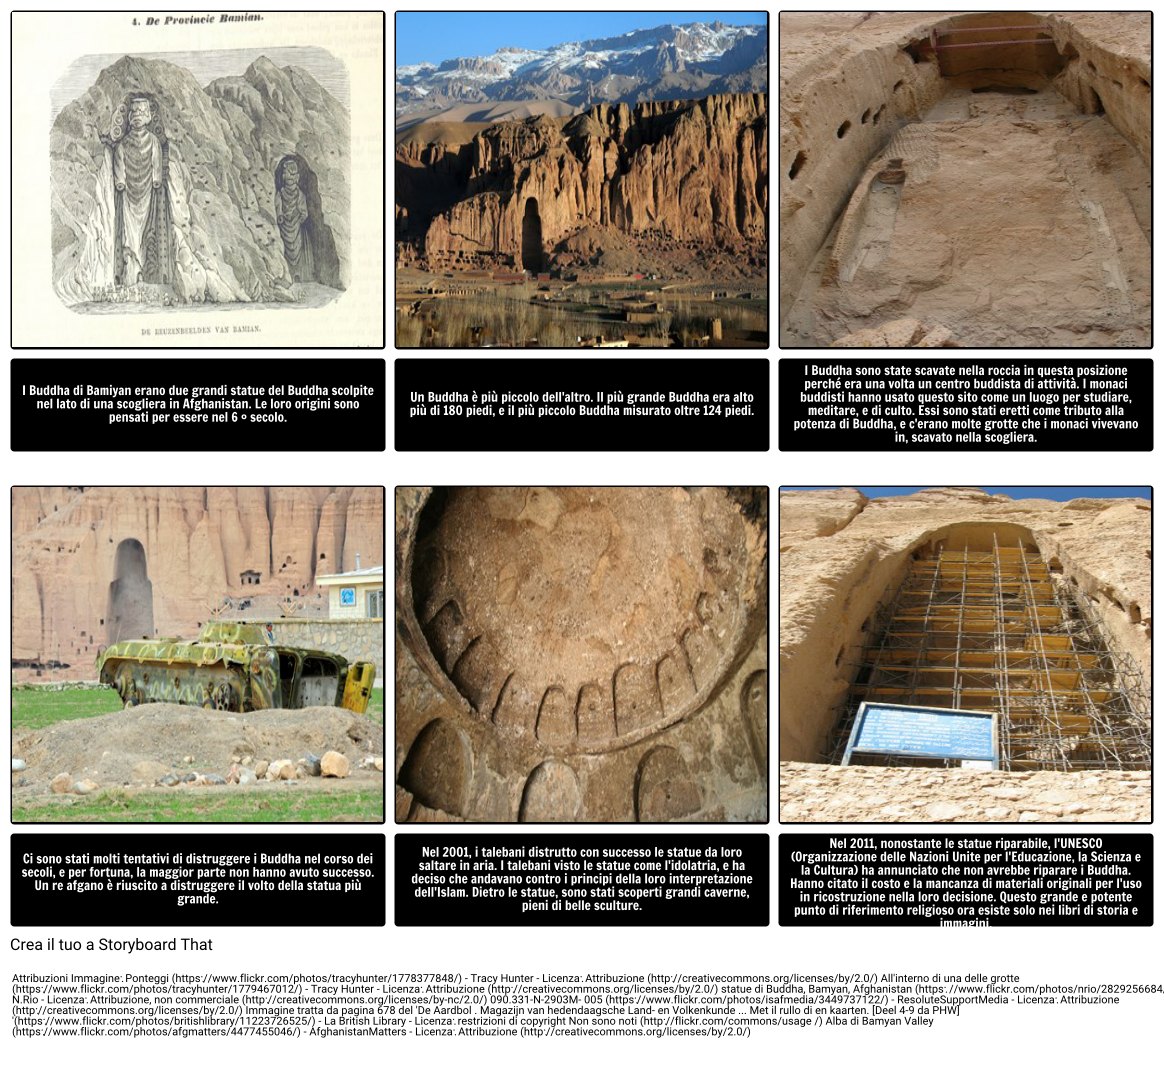 Collegamento con il tema del "Ozymandias": Bamiyan Buddhas